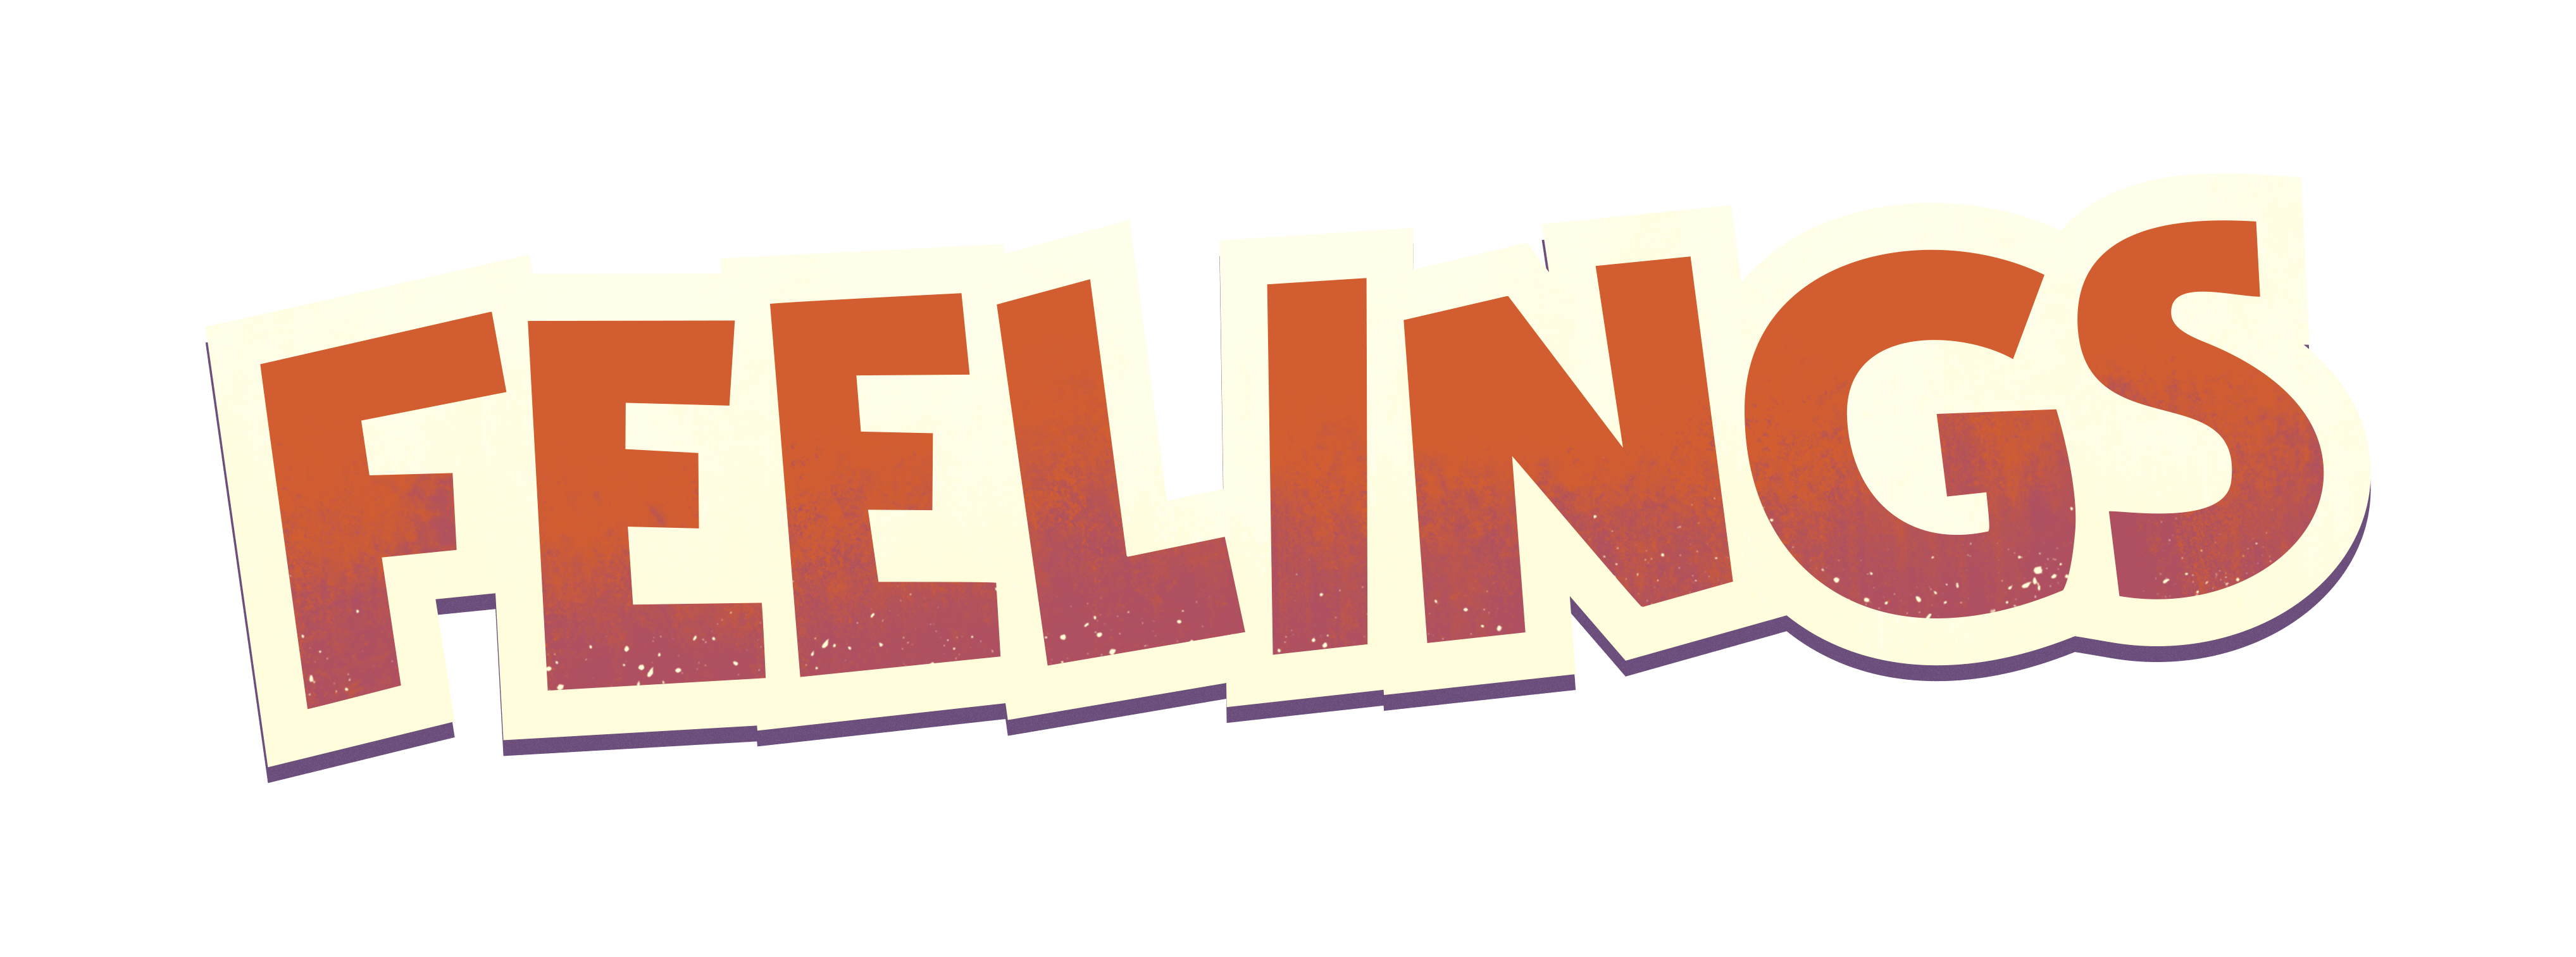 Feelings logo